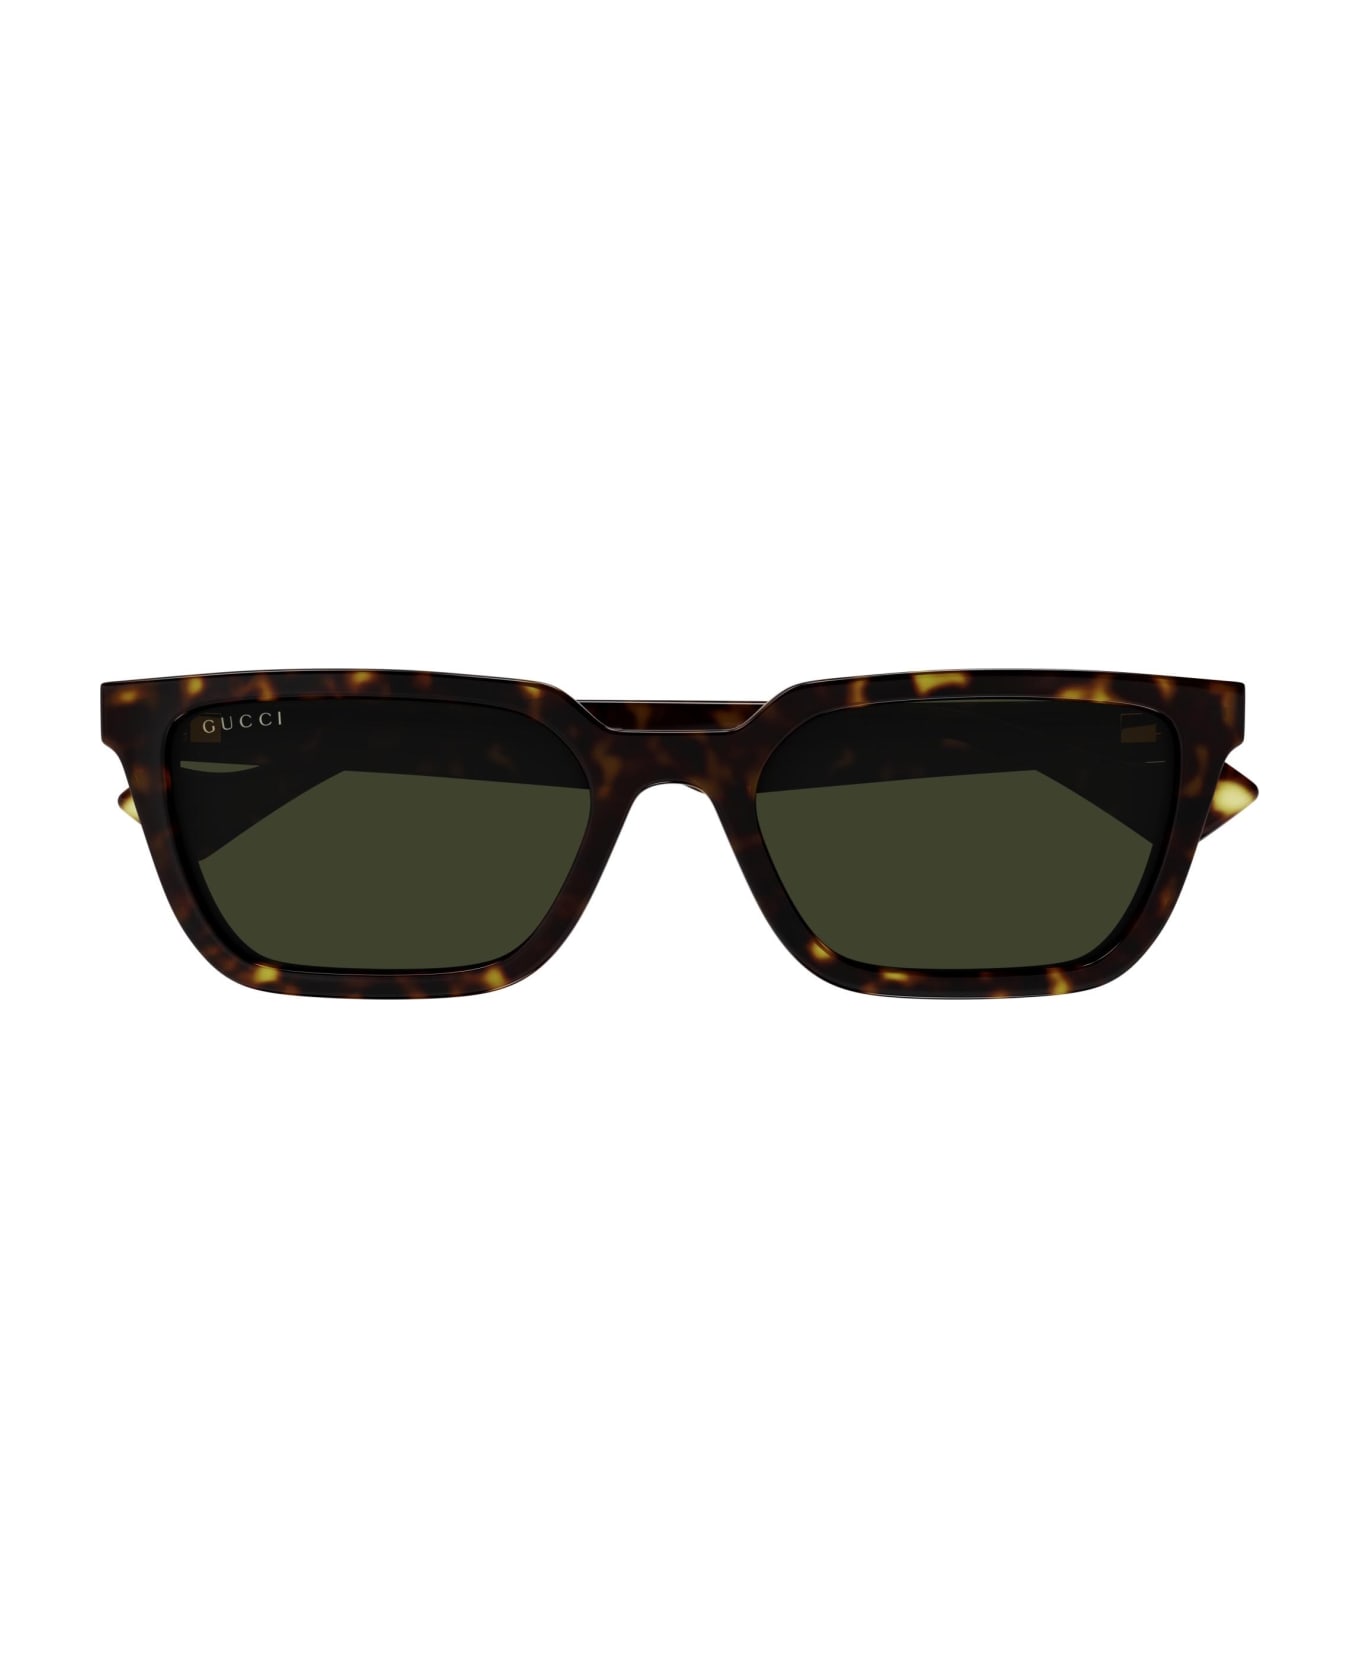 Gucci Eyewear Sunglasses - Havana/Verde